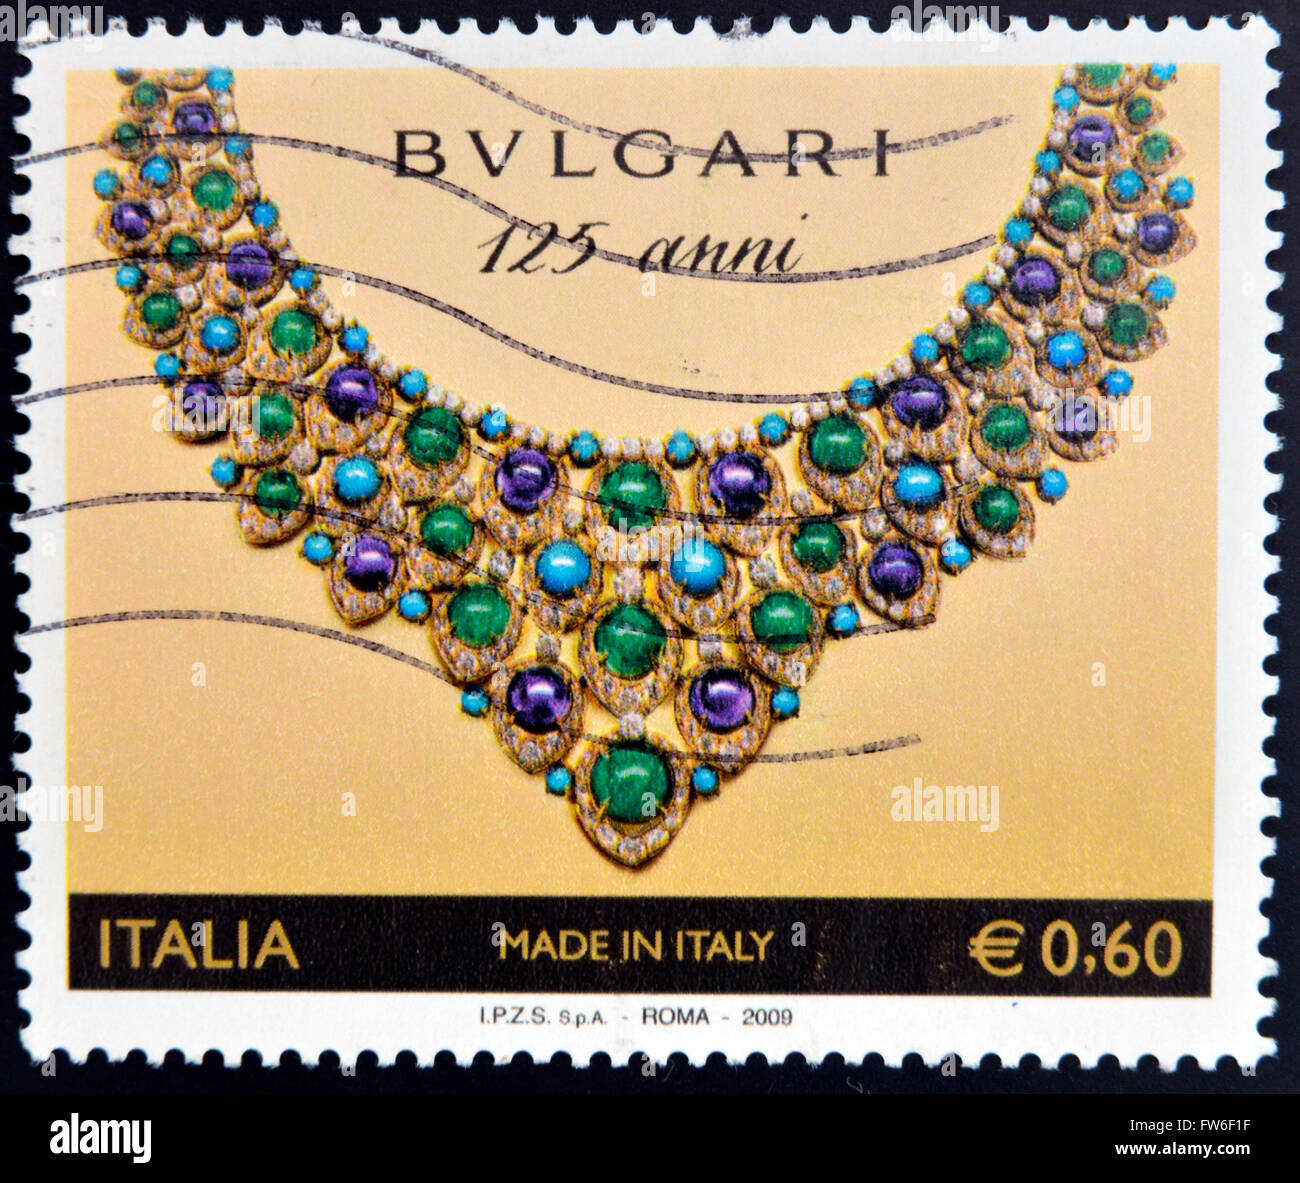 ITALY - CIRCA 2000: Stamp printed in Italy dedicated to the anniversary of the Italian brand of jewelry, Bulgari, circa 2000 Stock Photo